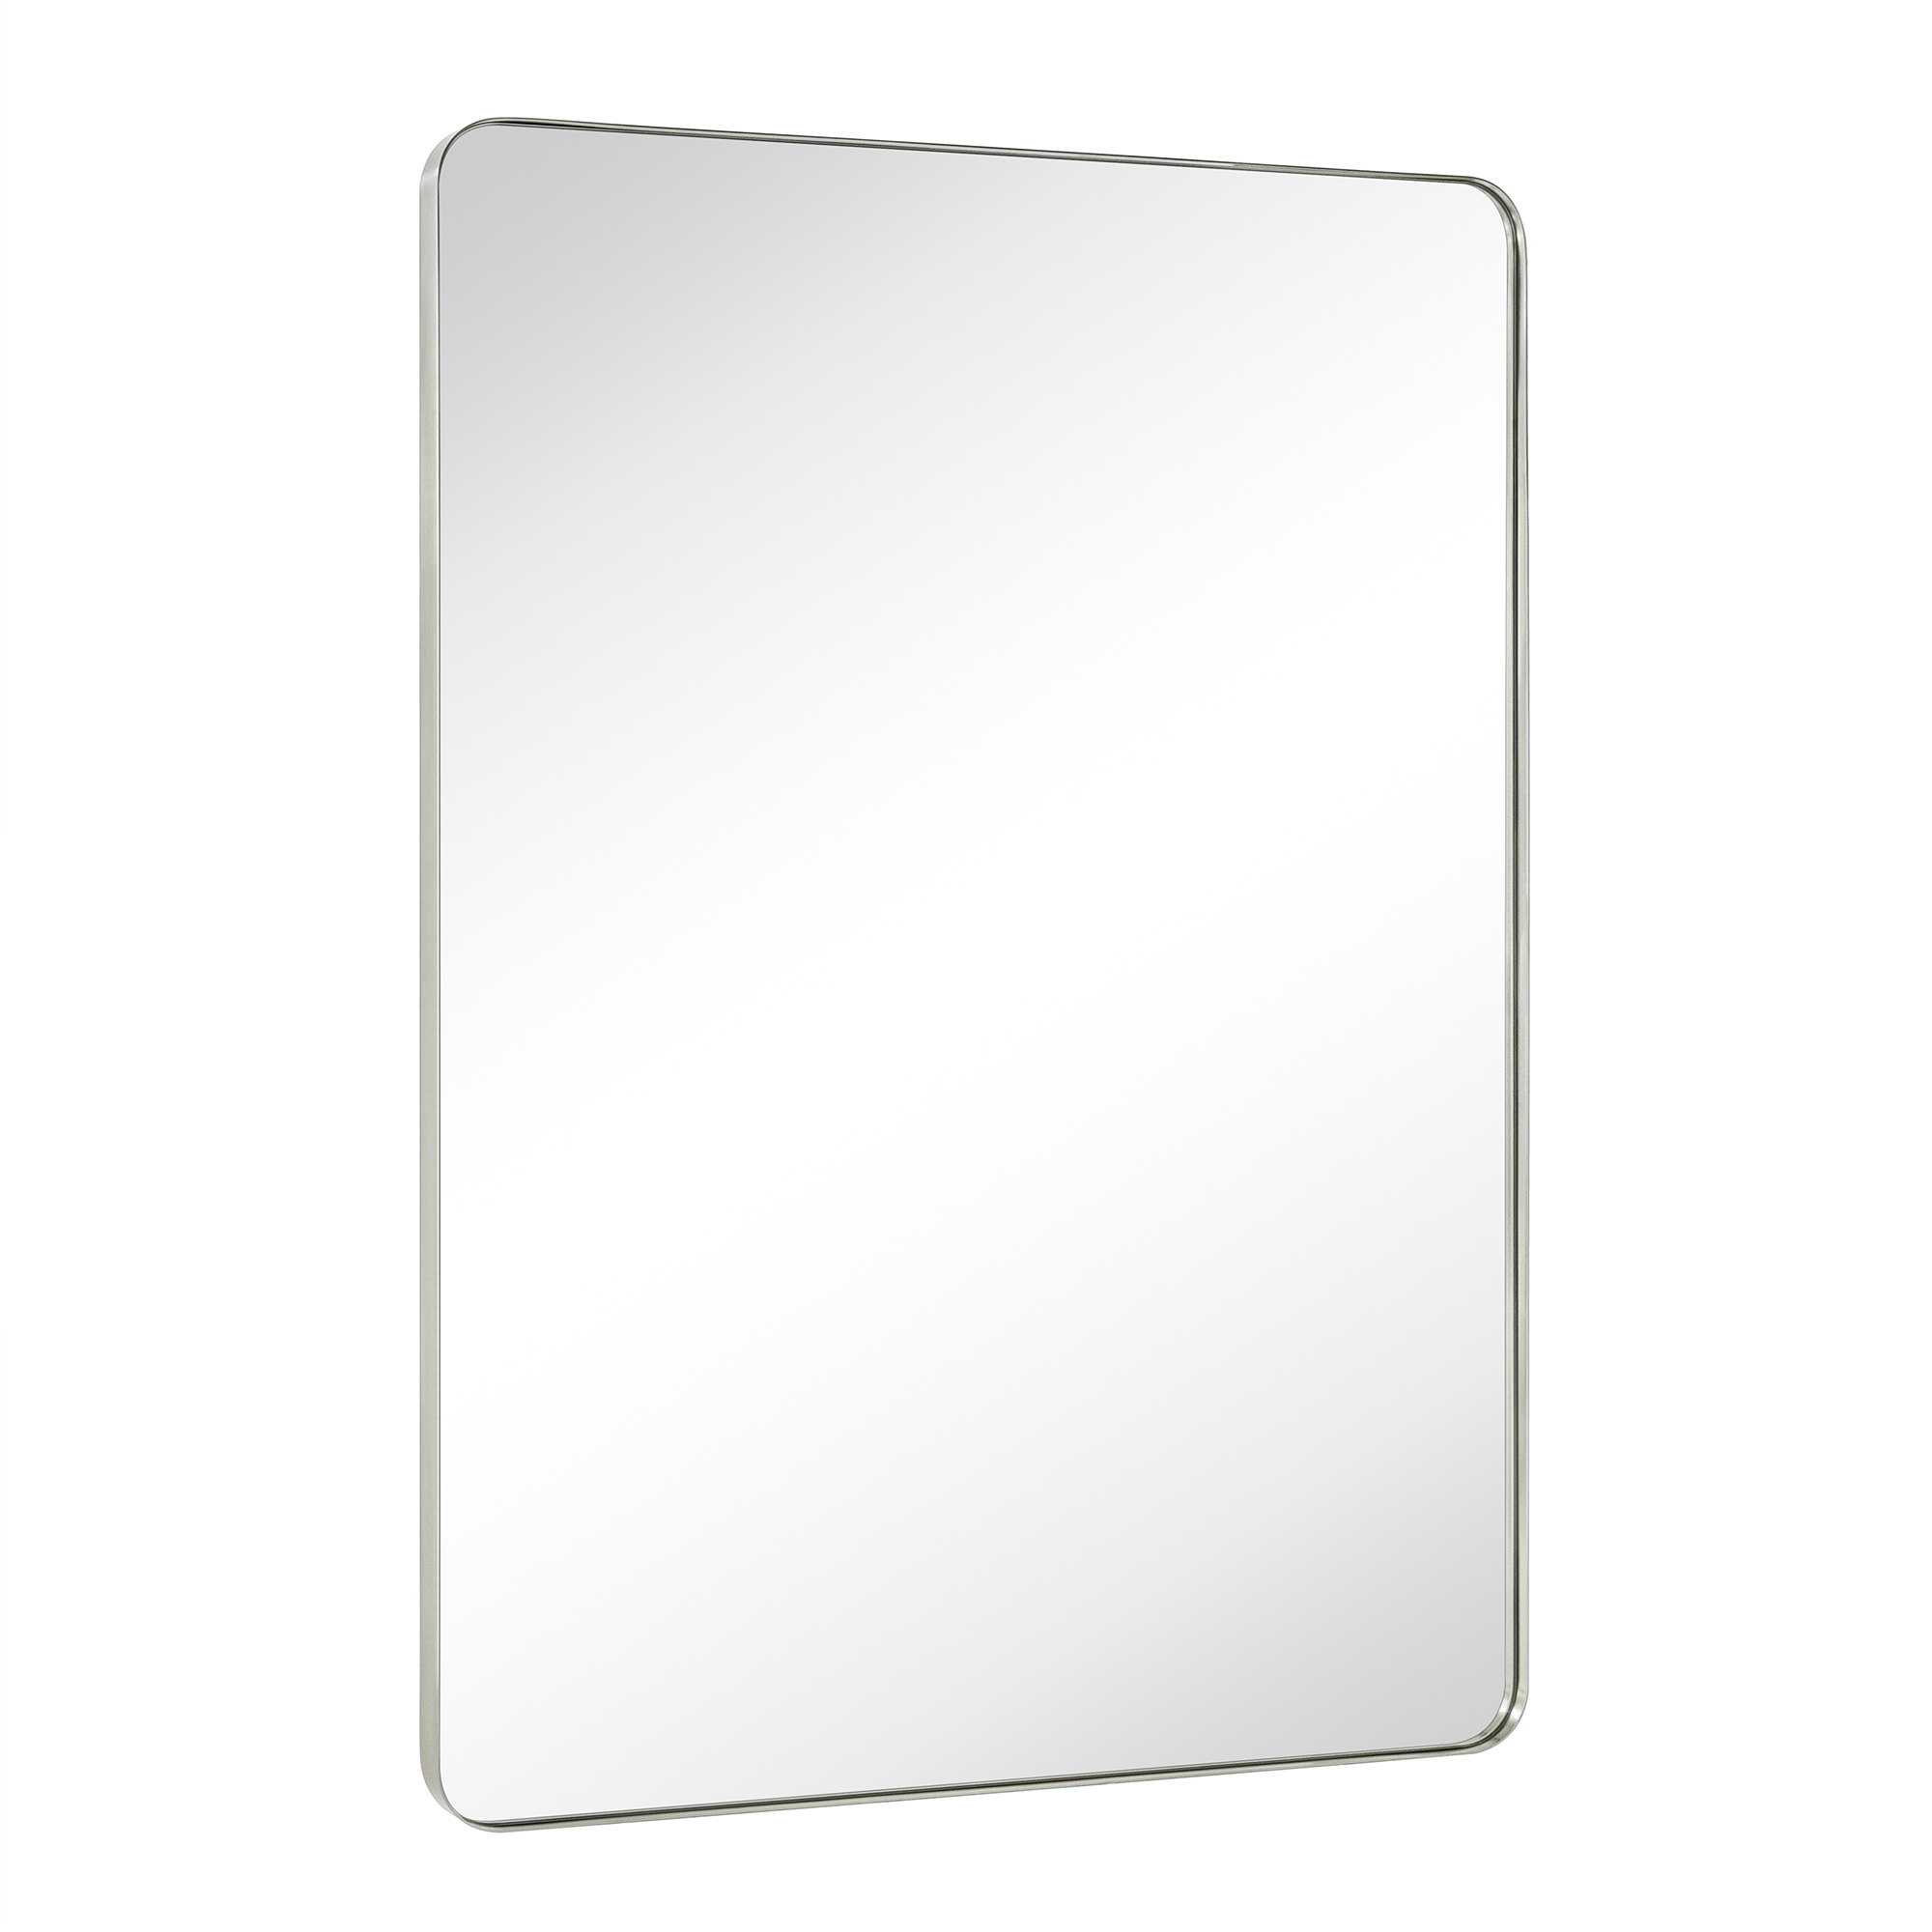 Kengston Modern & Contemporary Rectangular Bathroom Vanity Mirrors-36x48-Brushed Nickel